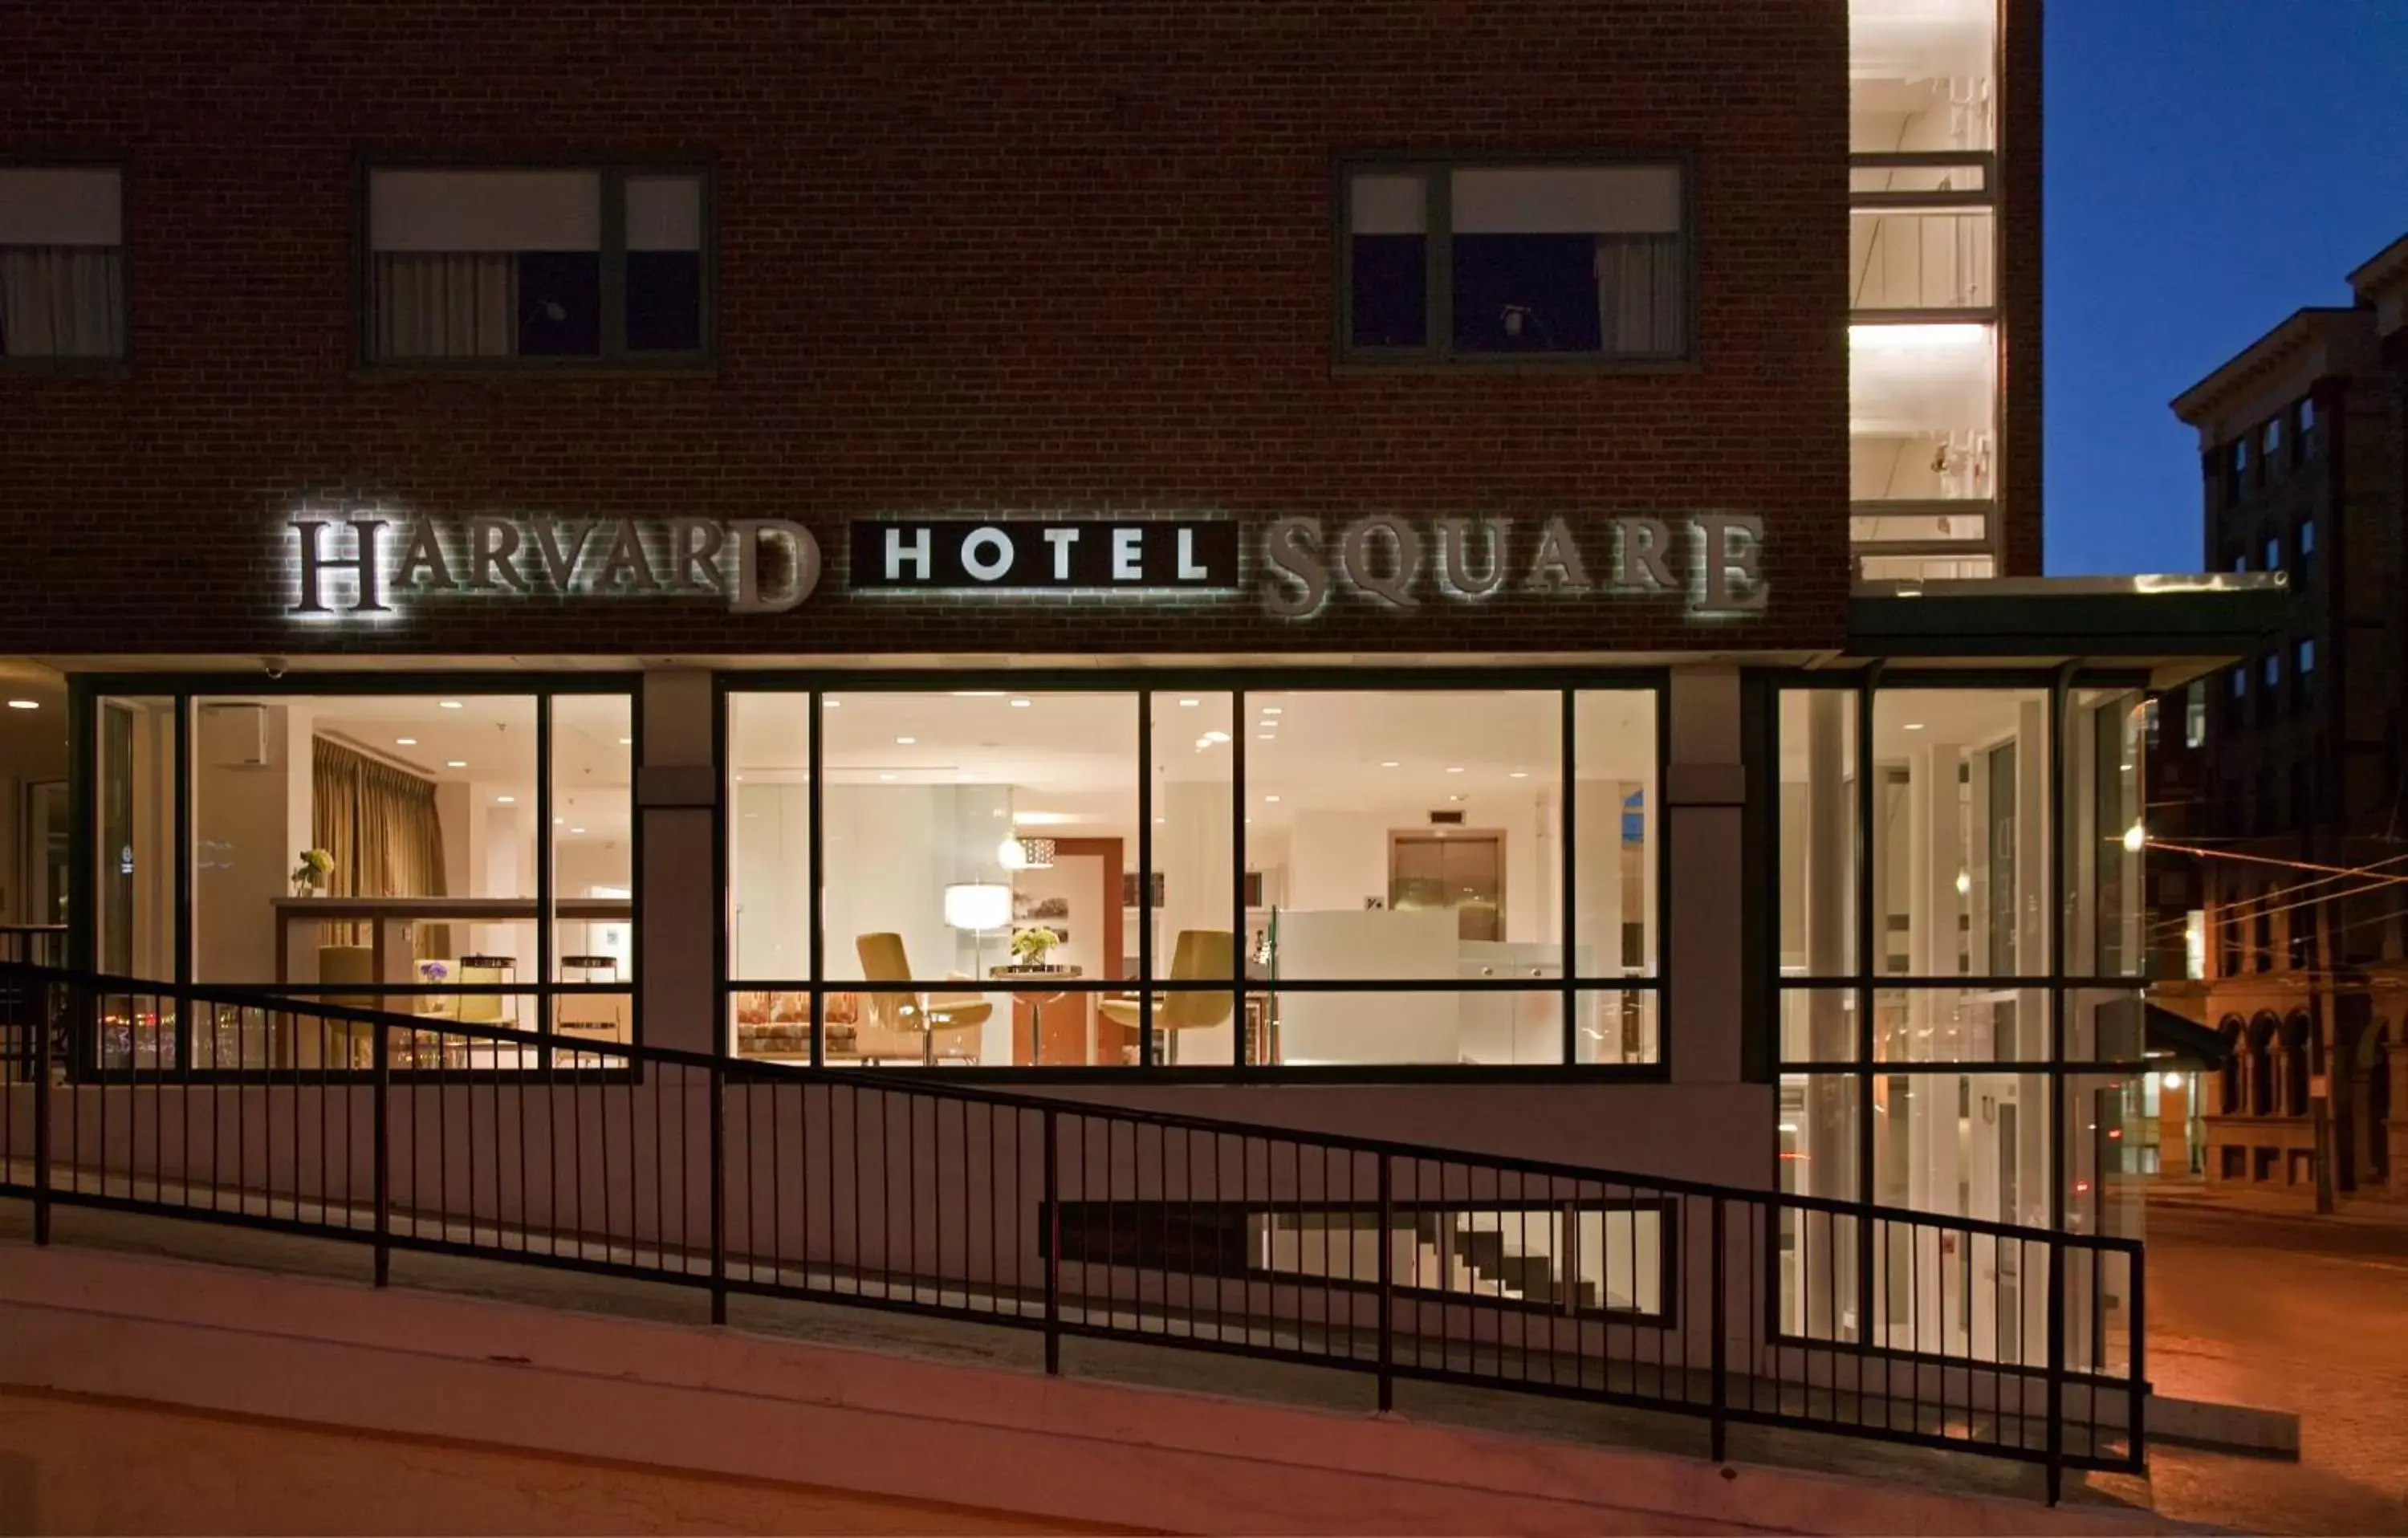 Facade/entrance in Harvard Square Hotel